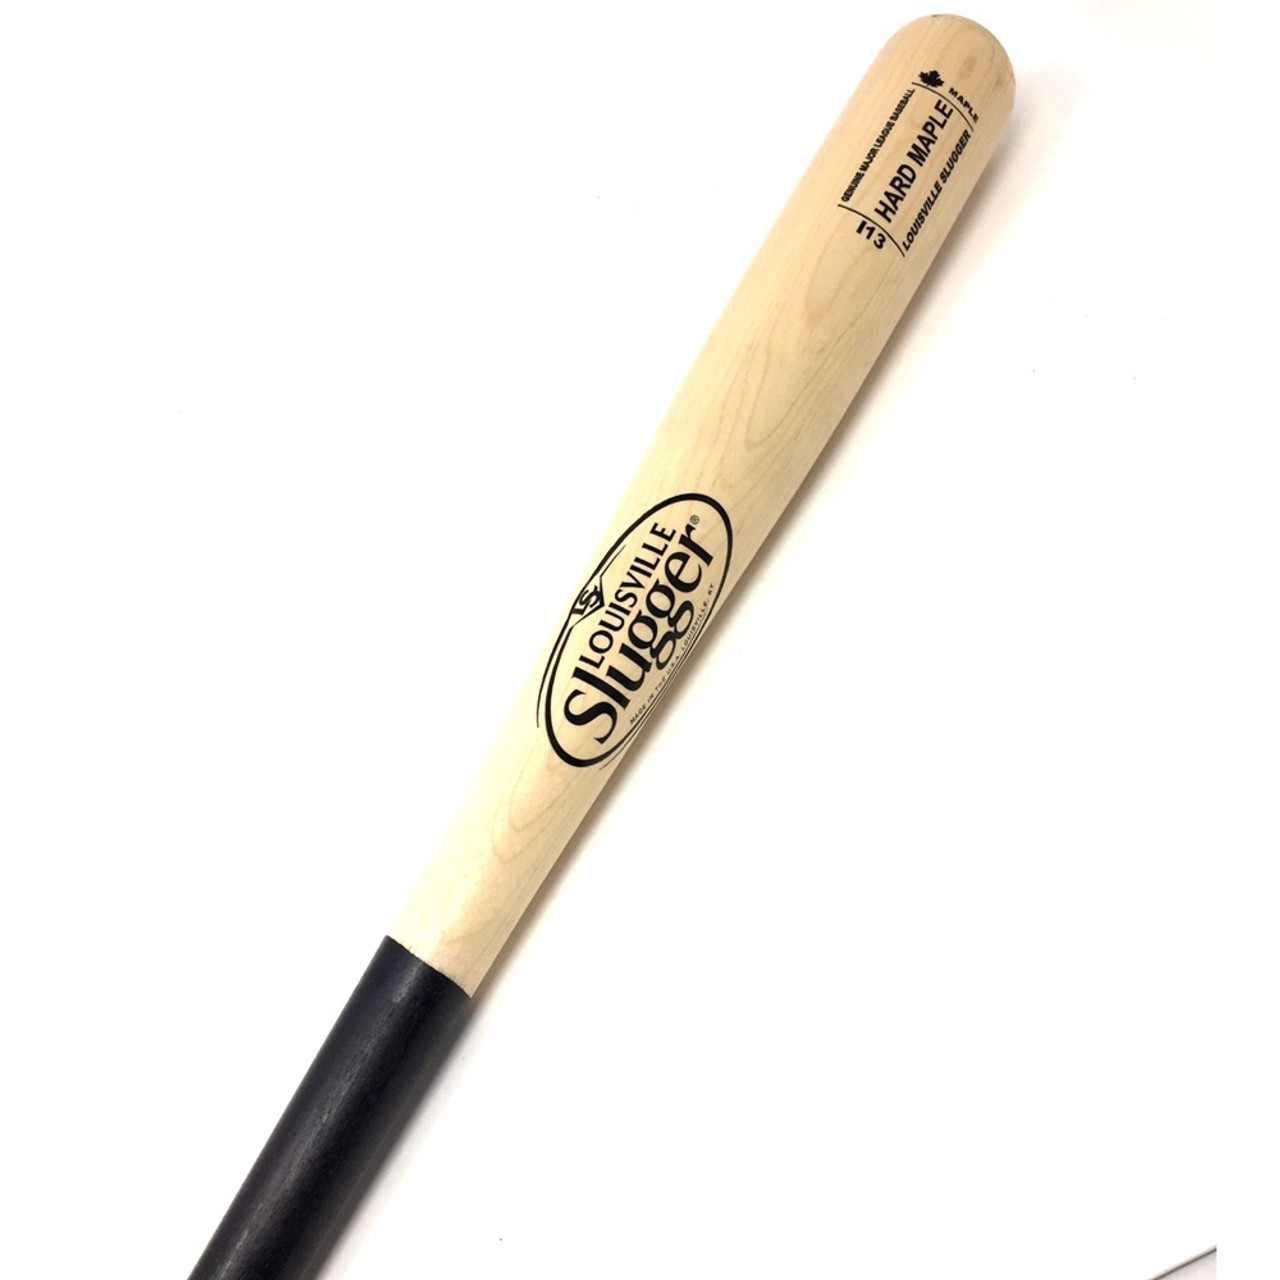 Louisville slugger wood bats 33.5 and 33.0